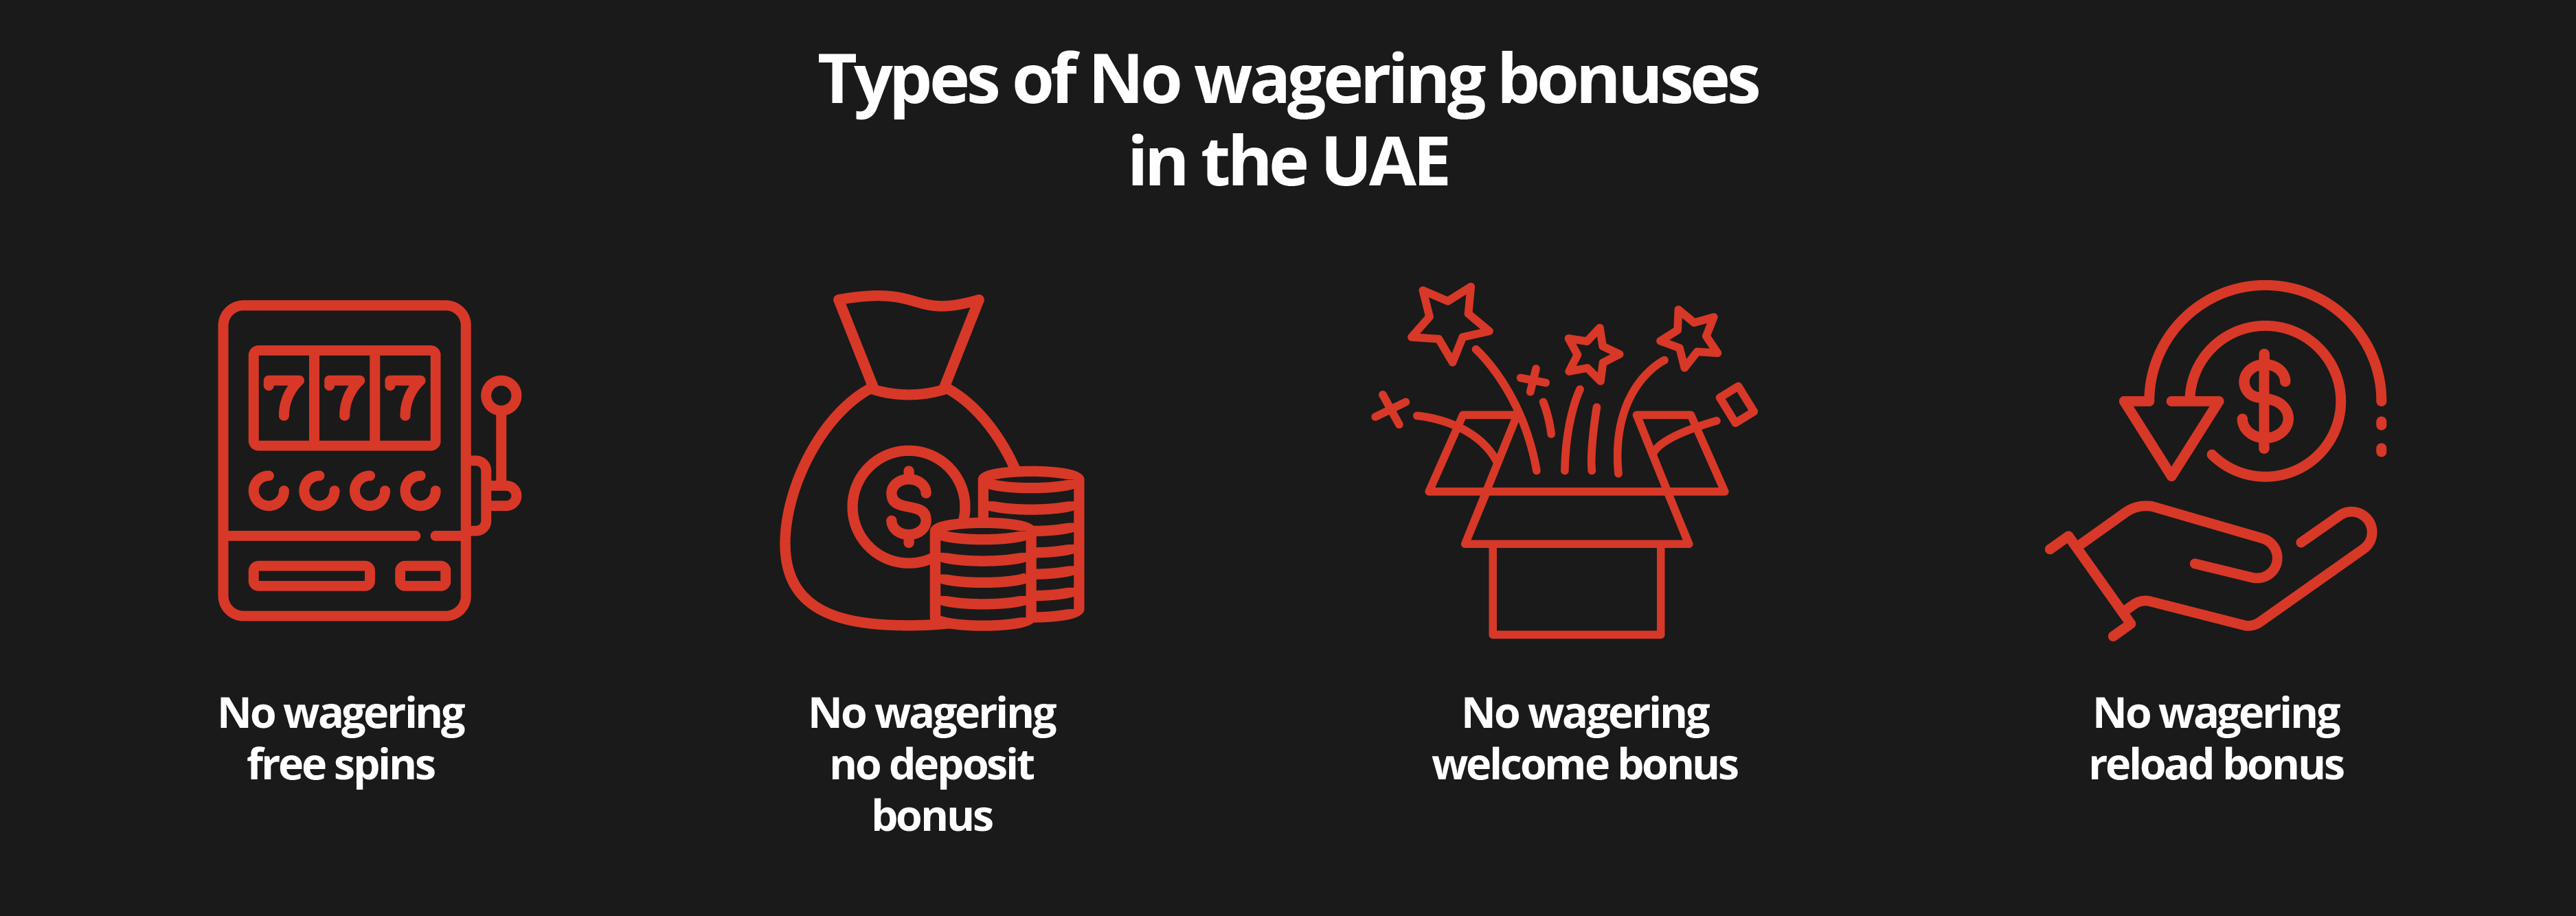 Types of no wagering bonuses UAE Casinos - Emirates Casino Bonuses 